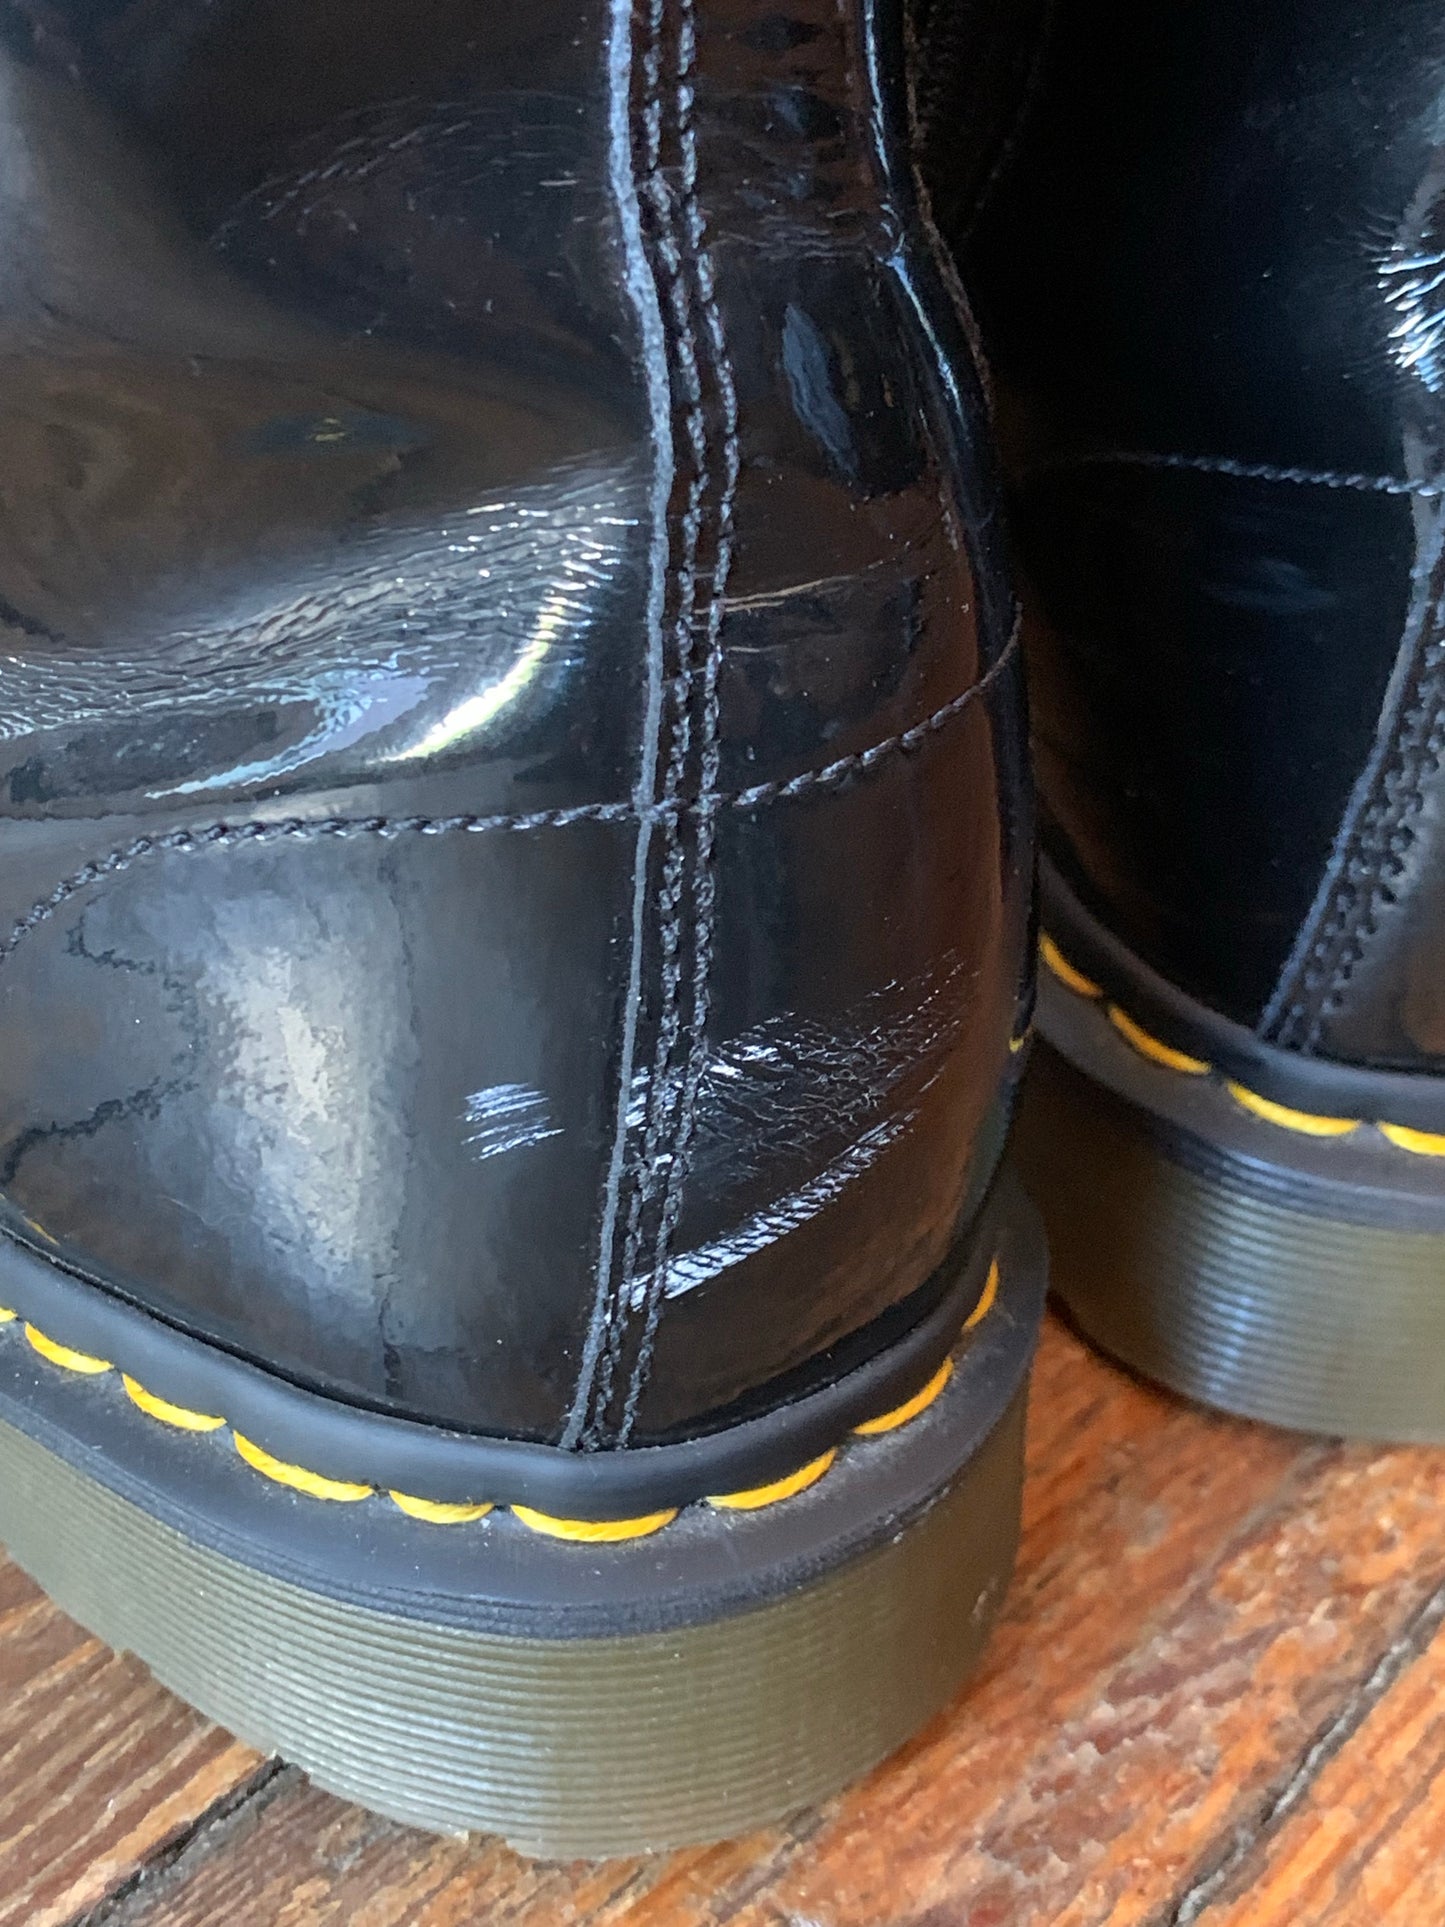 Doc Marten 20 Eyelet Black Patent Leather Combat Boots